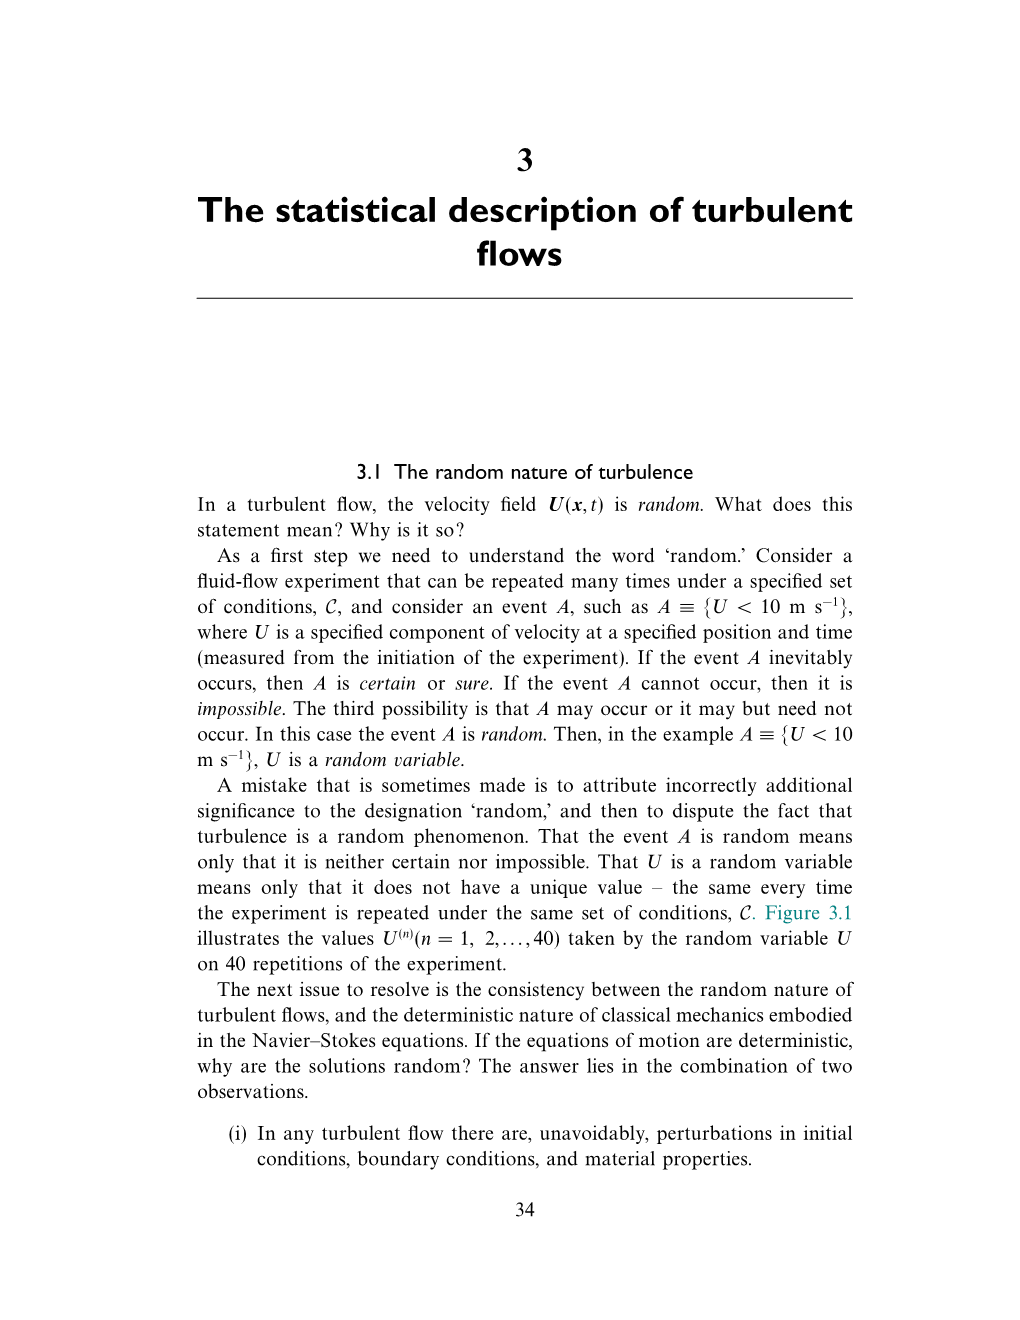 The Statistical Description of Turbulent Flows